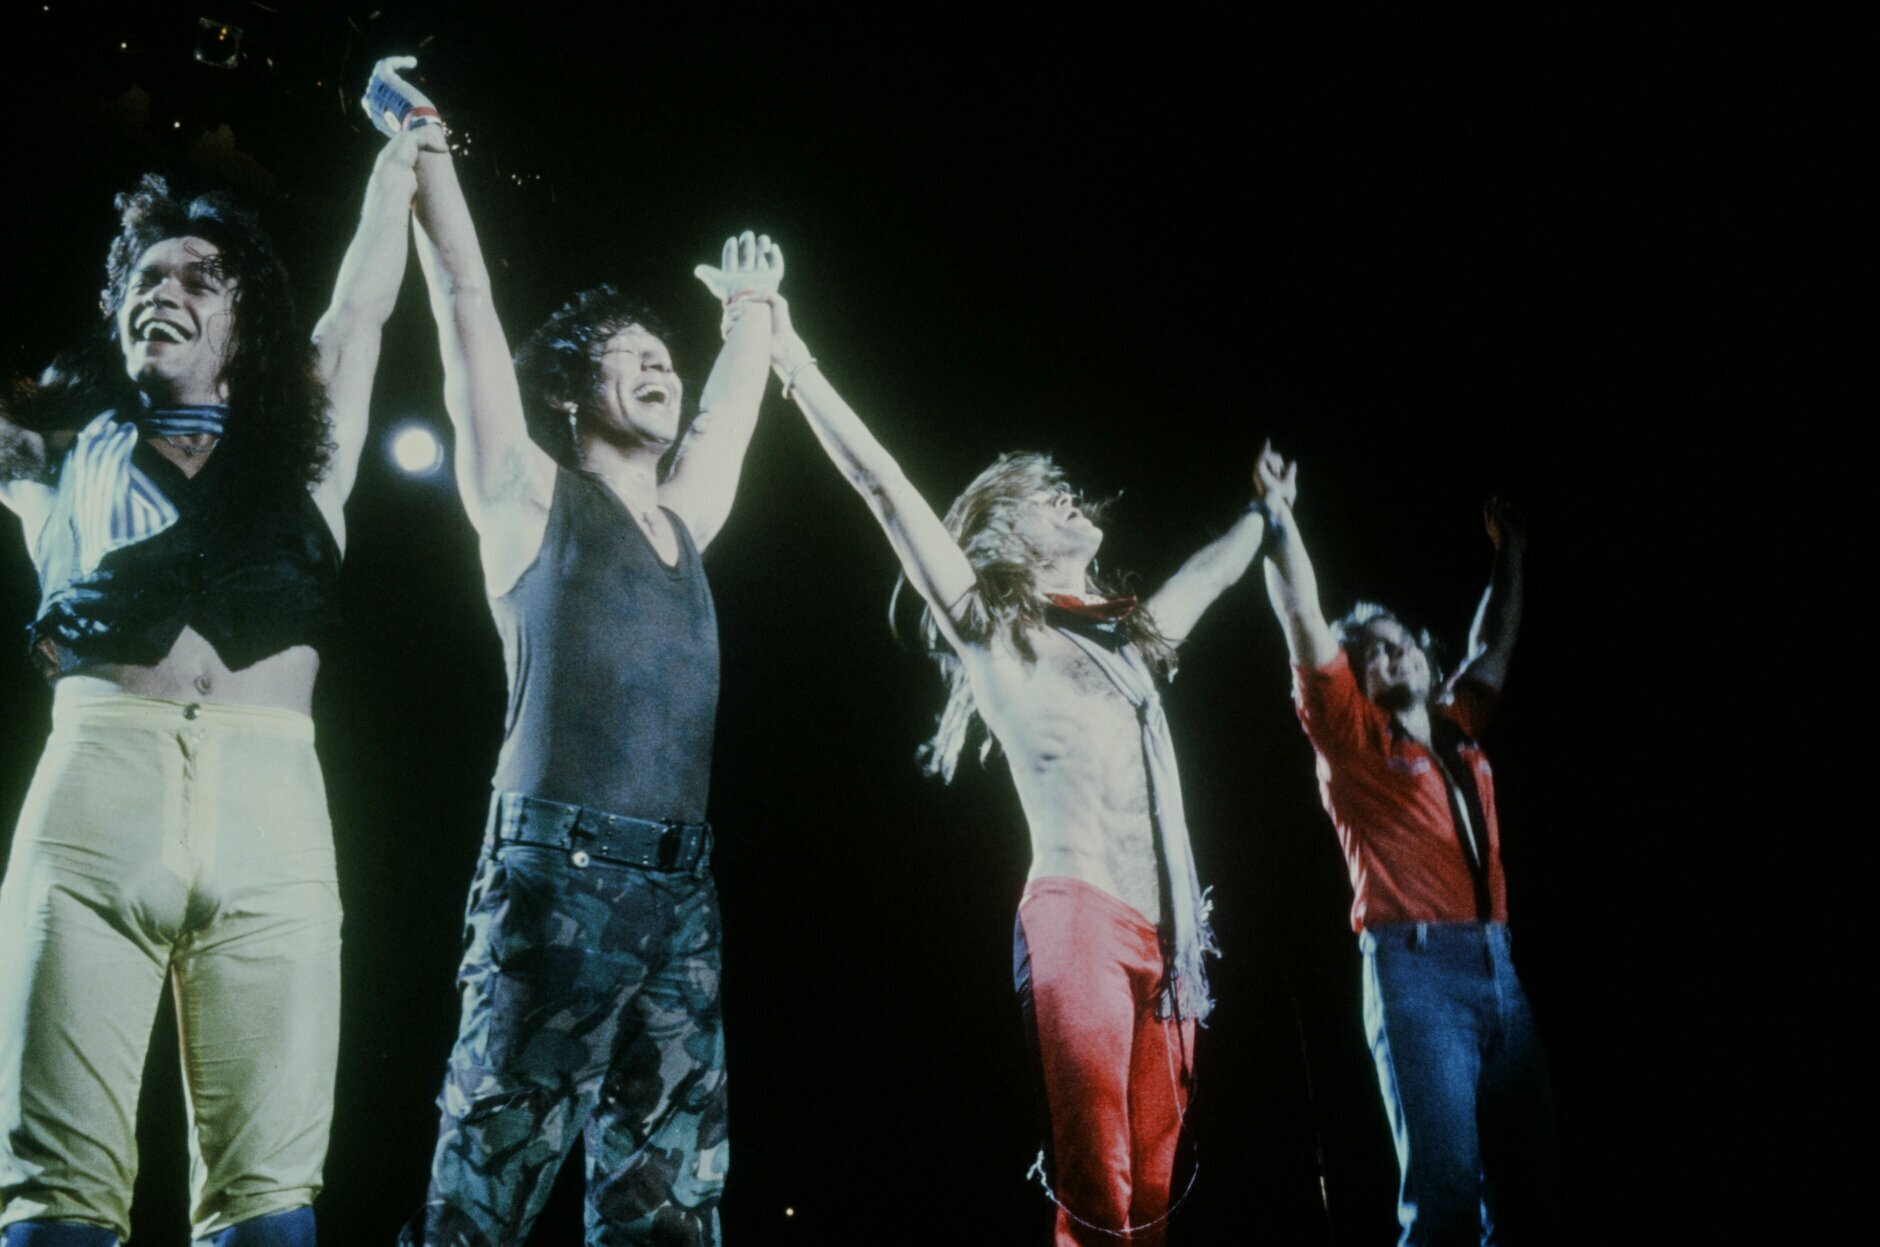 (MANDATORY CREDIT Koh Hasebe/Shinko Music/Getty Images) Van Halen live at Nippon Budokan, making greetings after the show, Tokyo, September 1979. (Photo by Koh Hasebe/Shinko Music/Getty Images)